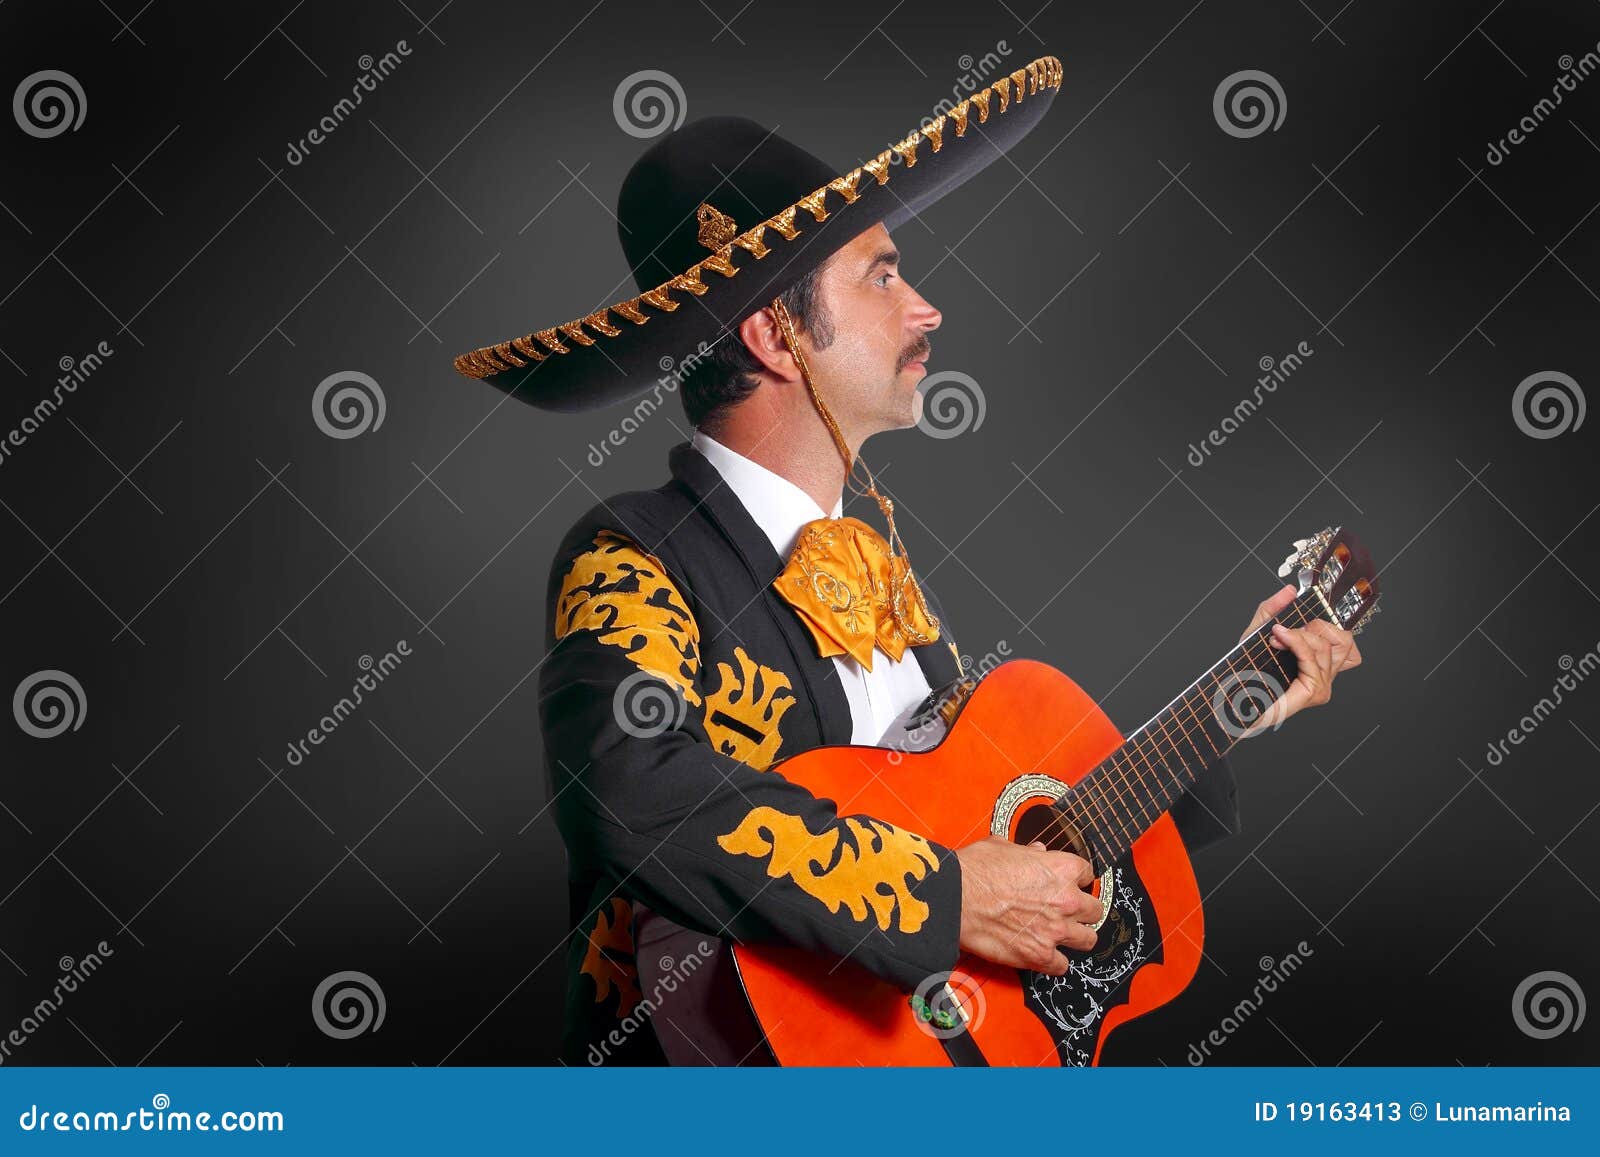 charro mariachi playing guitar on black